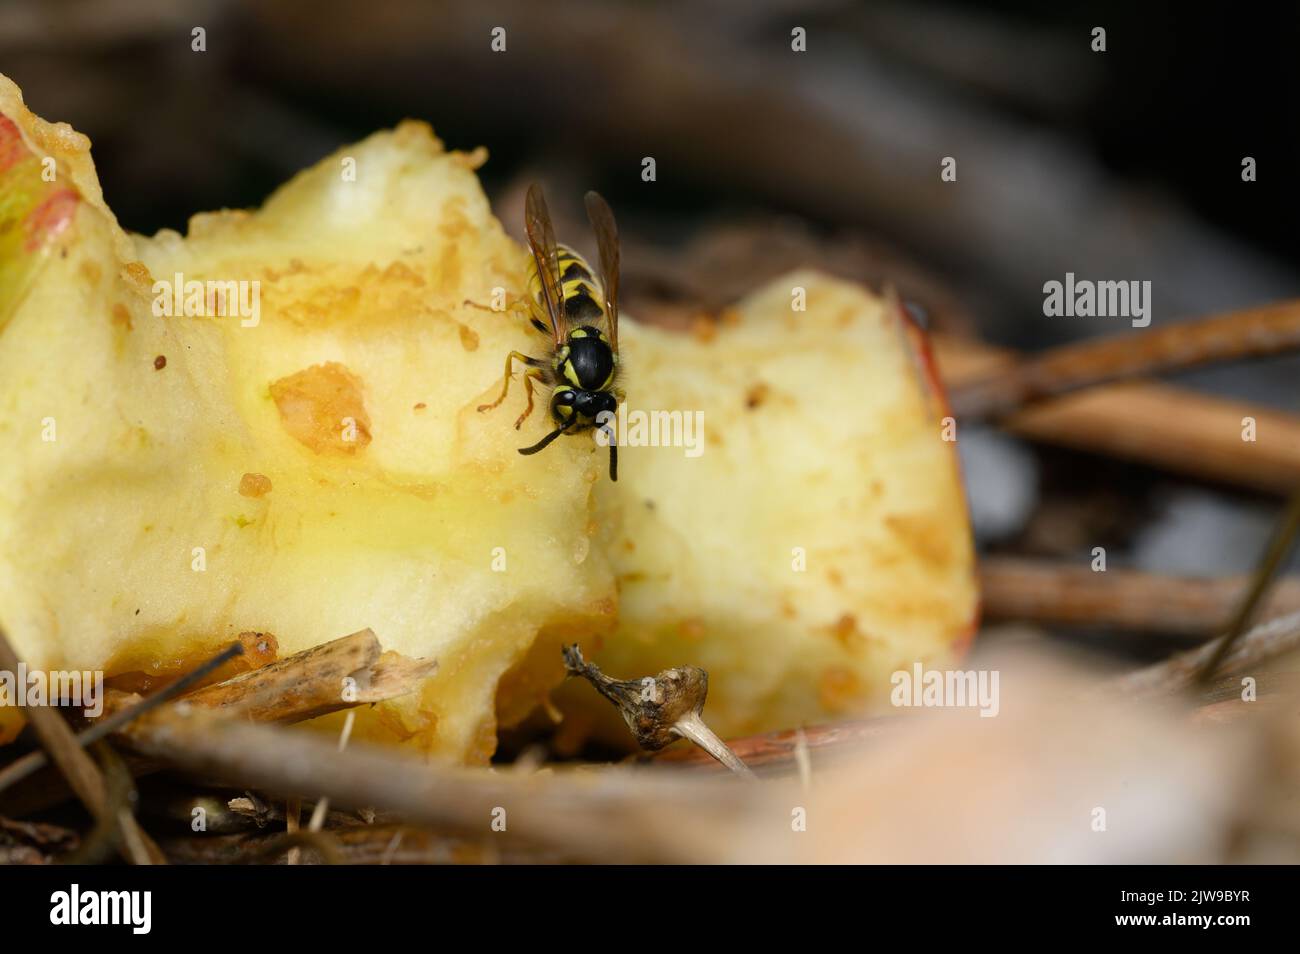 Common wasp (Vespula vulgaris) on apple core. Stock Photo